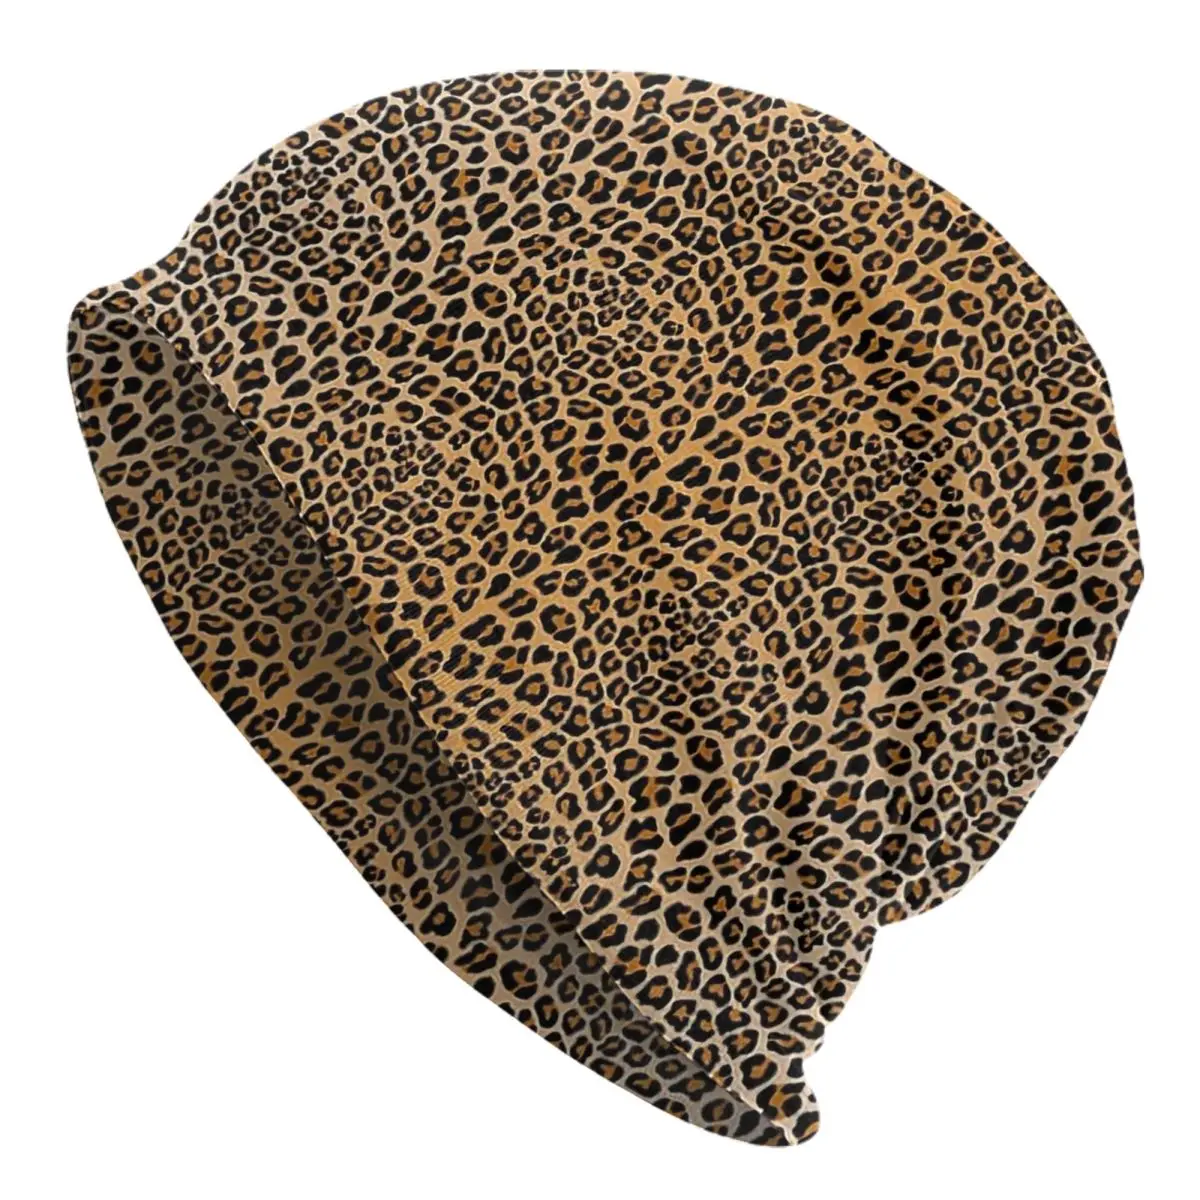 Leopard Print Adult Men's Women's Knit Hat Keep warm winter Funny knitted hat